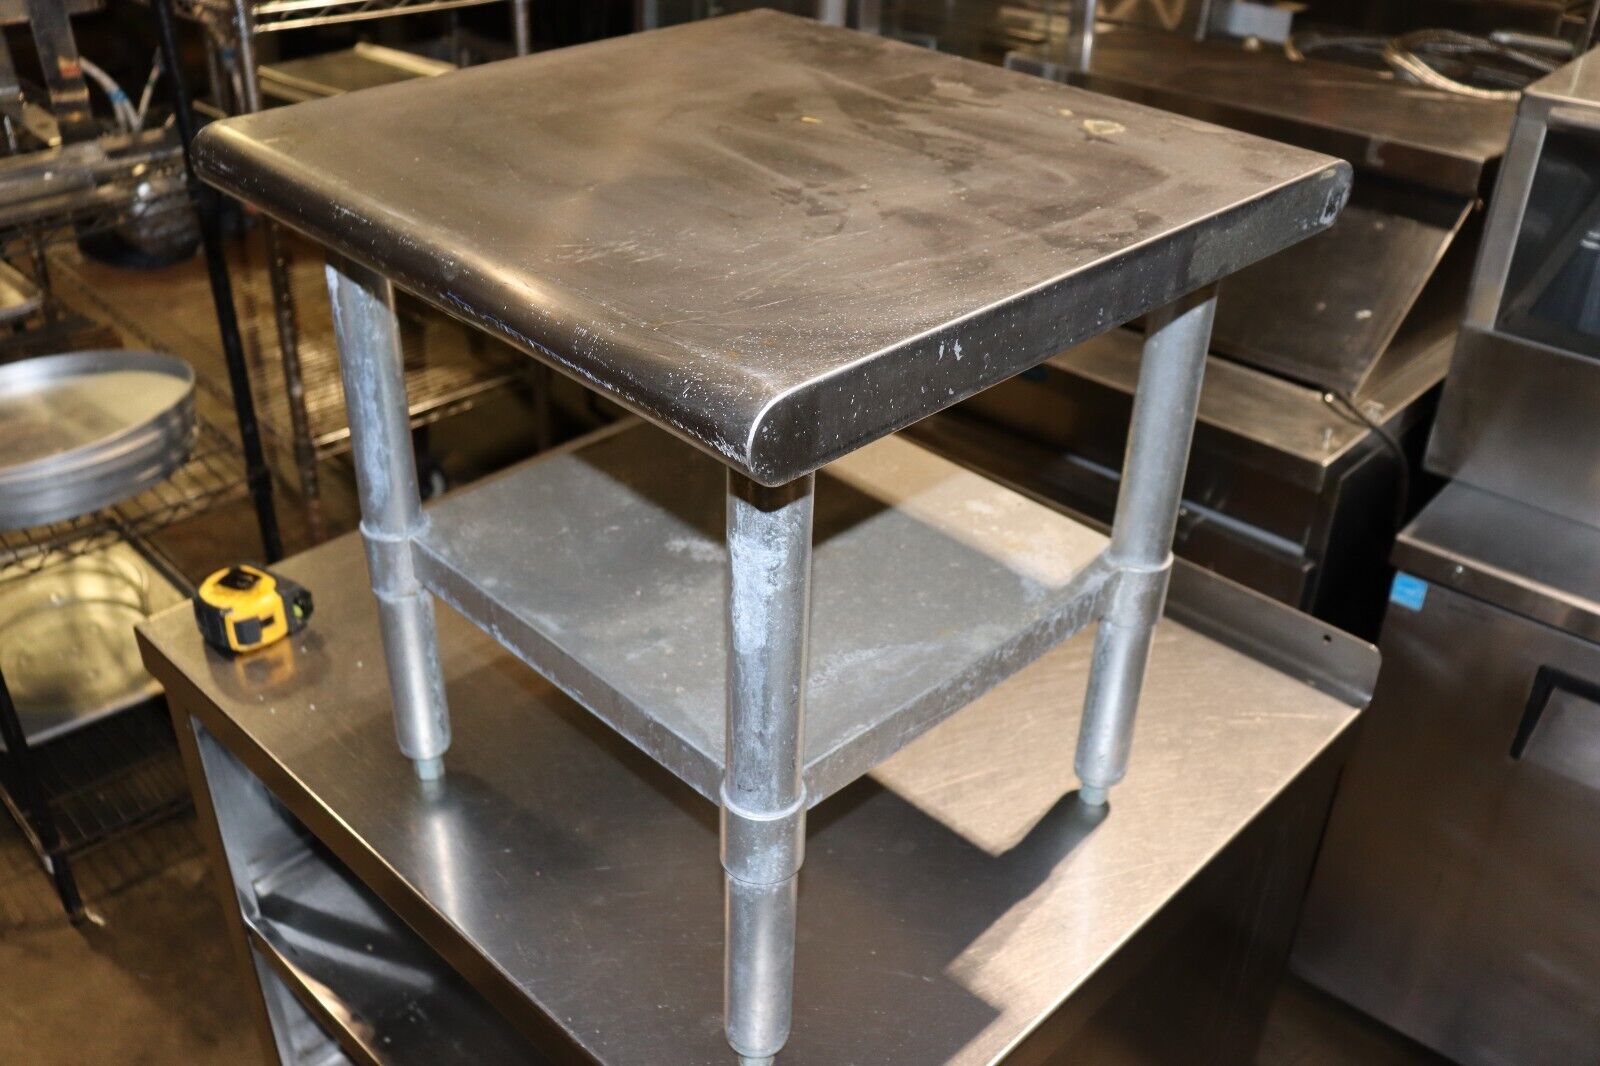 20 Inch x 20 Inch Mixer Table With Utensil Rack Galvanized Undershelf Stationary